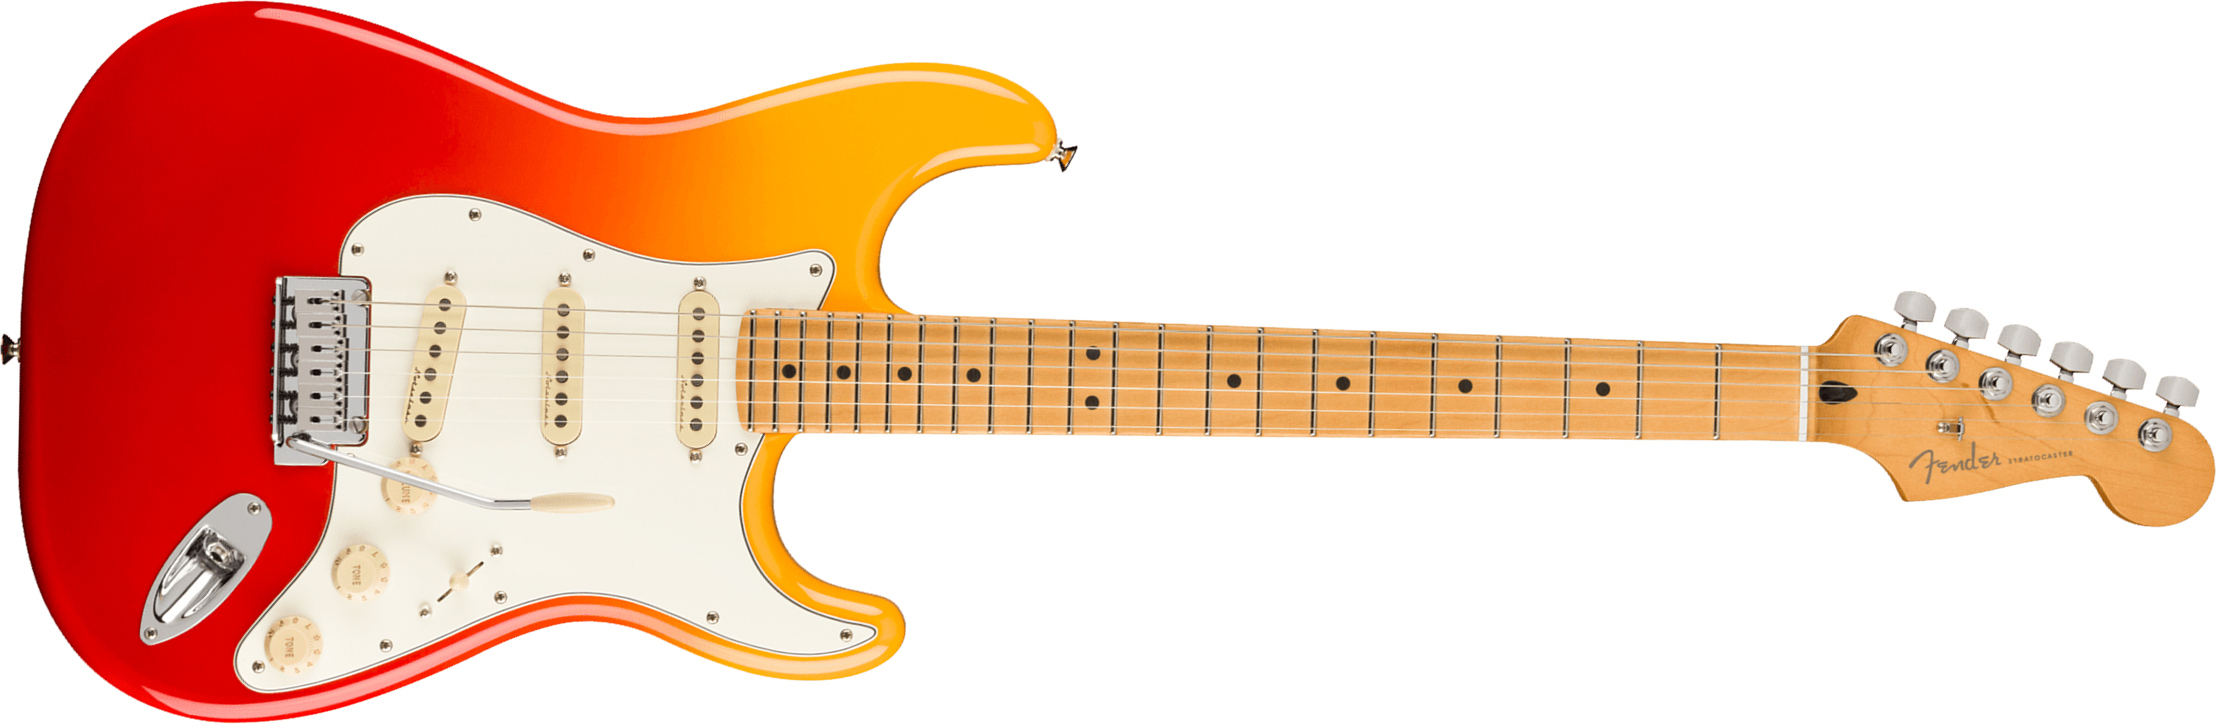 Fender Strat Player Plus Mex 3s Trem Mn - Tequila Sunrise - Str shape electric guitar - Main picture